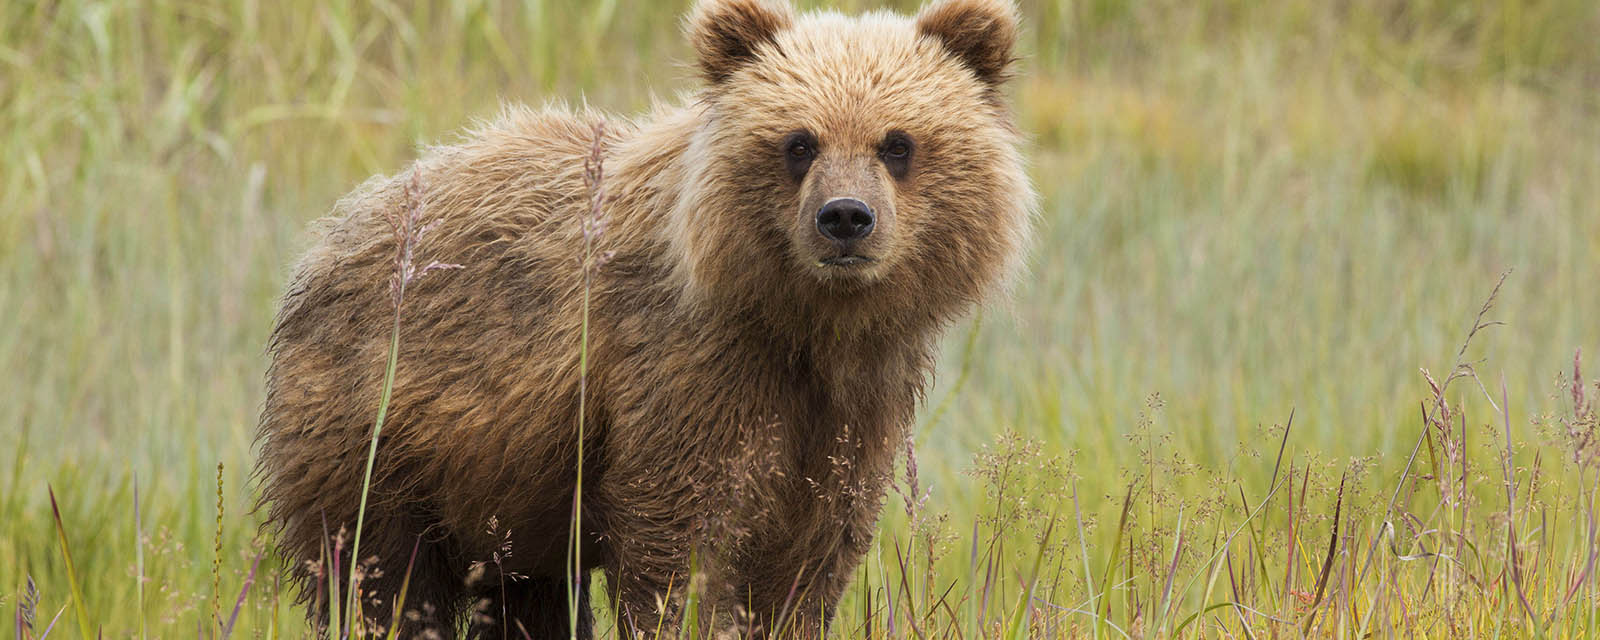 brown bear cub in a prairie looking at the camera